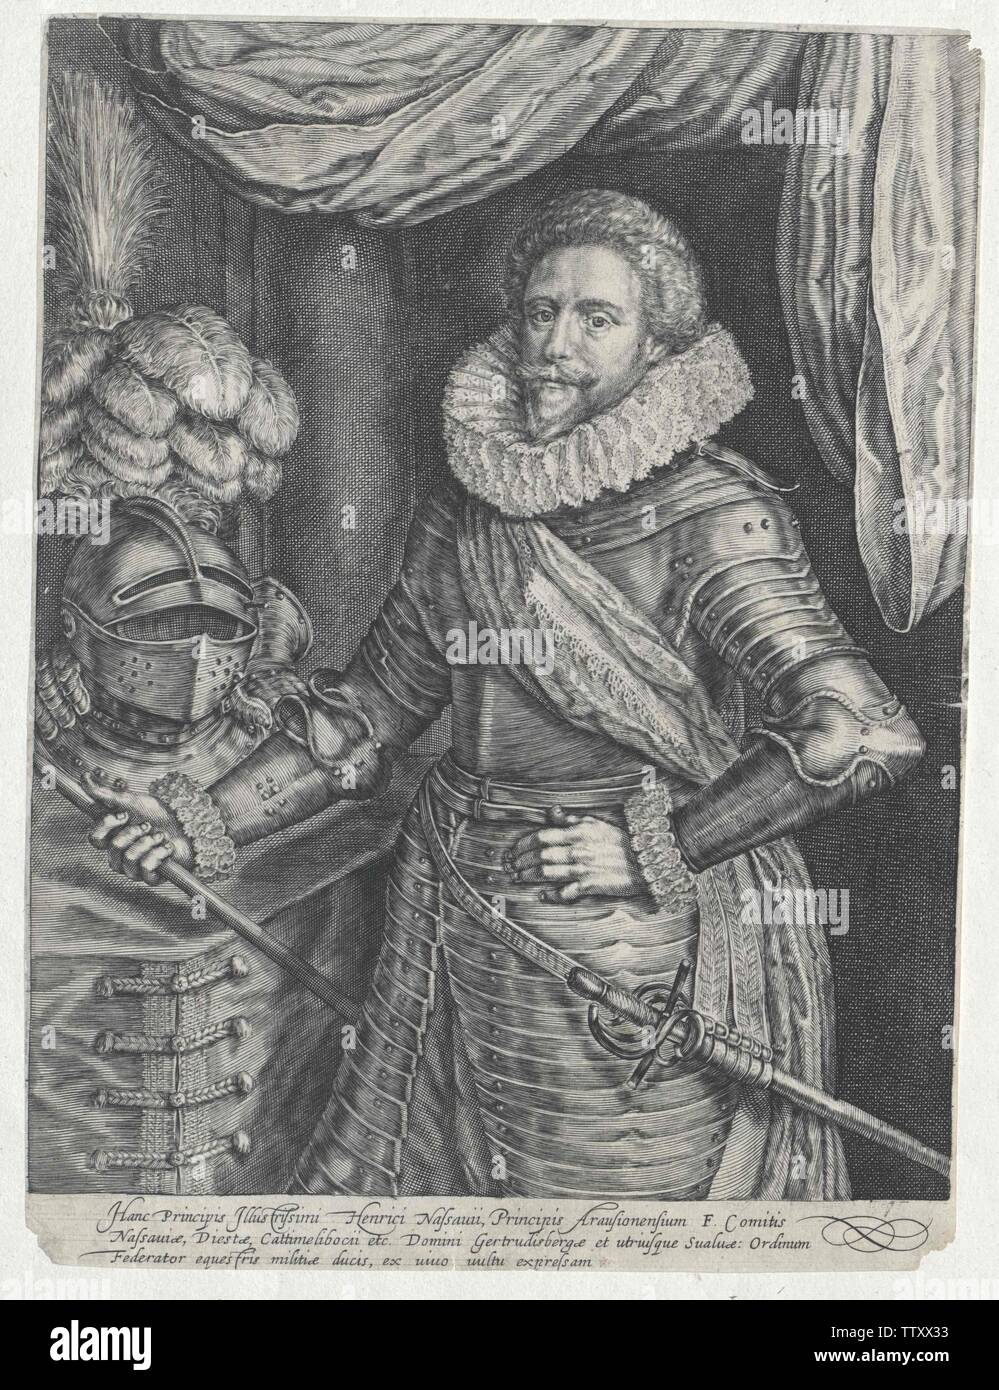 Frederick Henry, principe di Orange, conte di Nassau, Additional-Rights-Clearance-Info-Not-Available Foto Stock